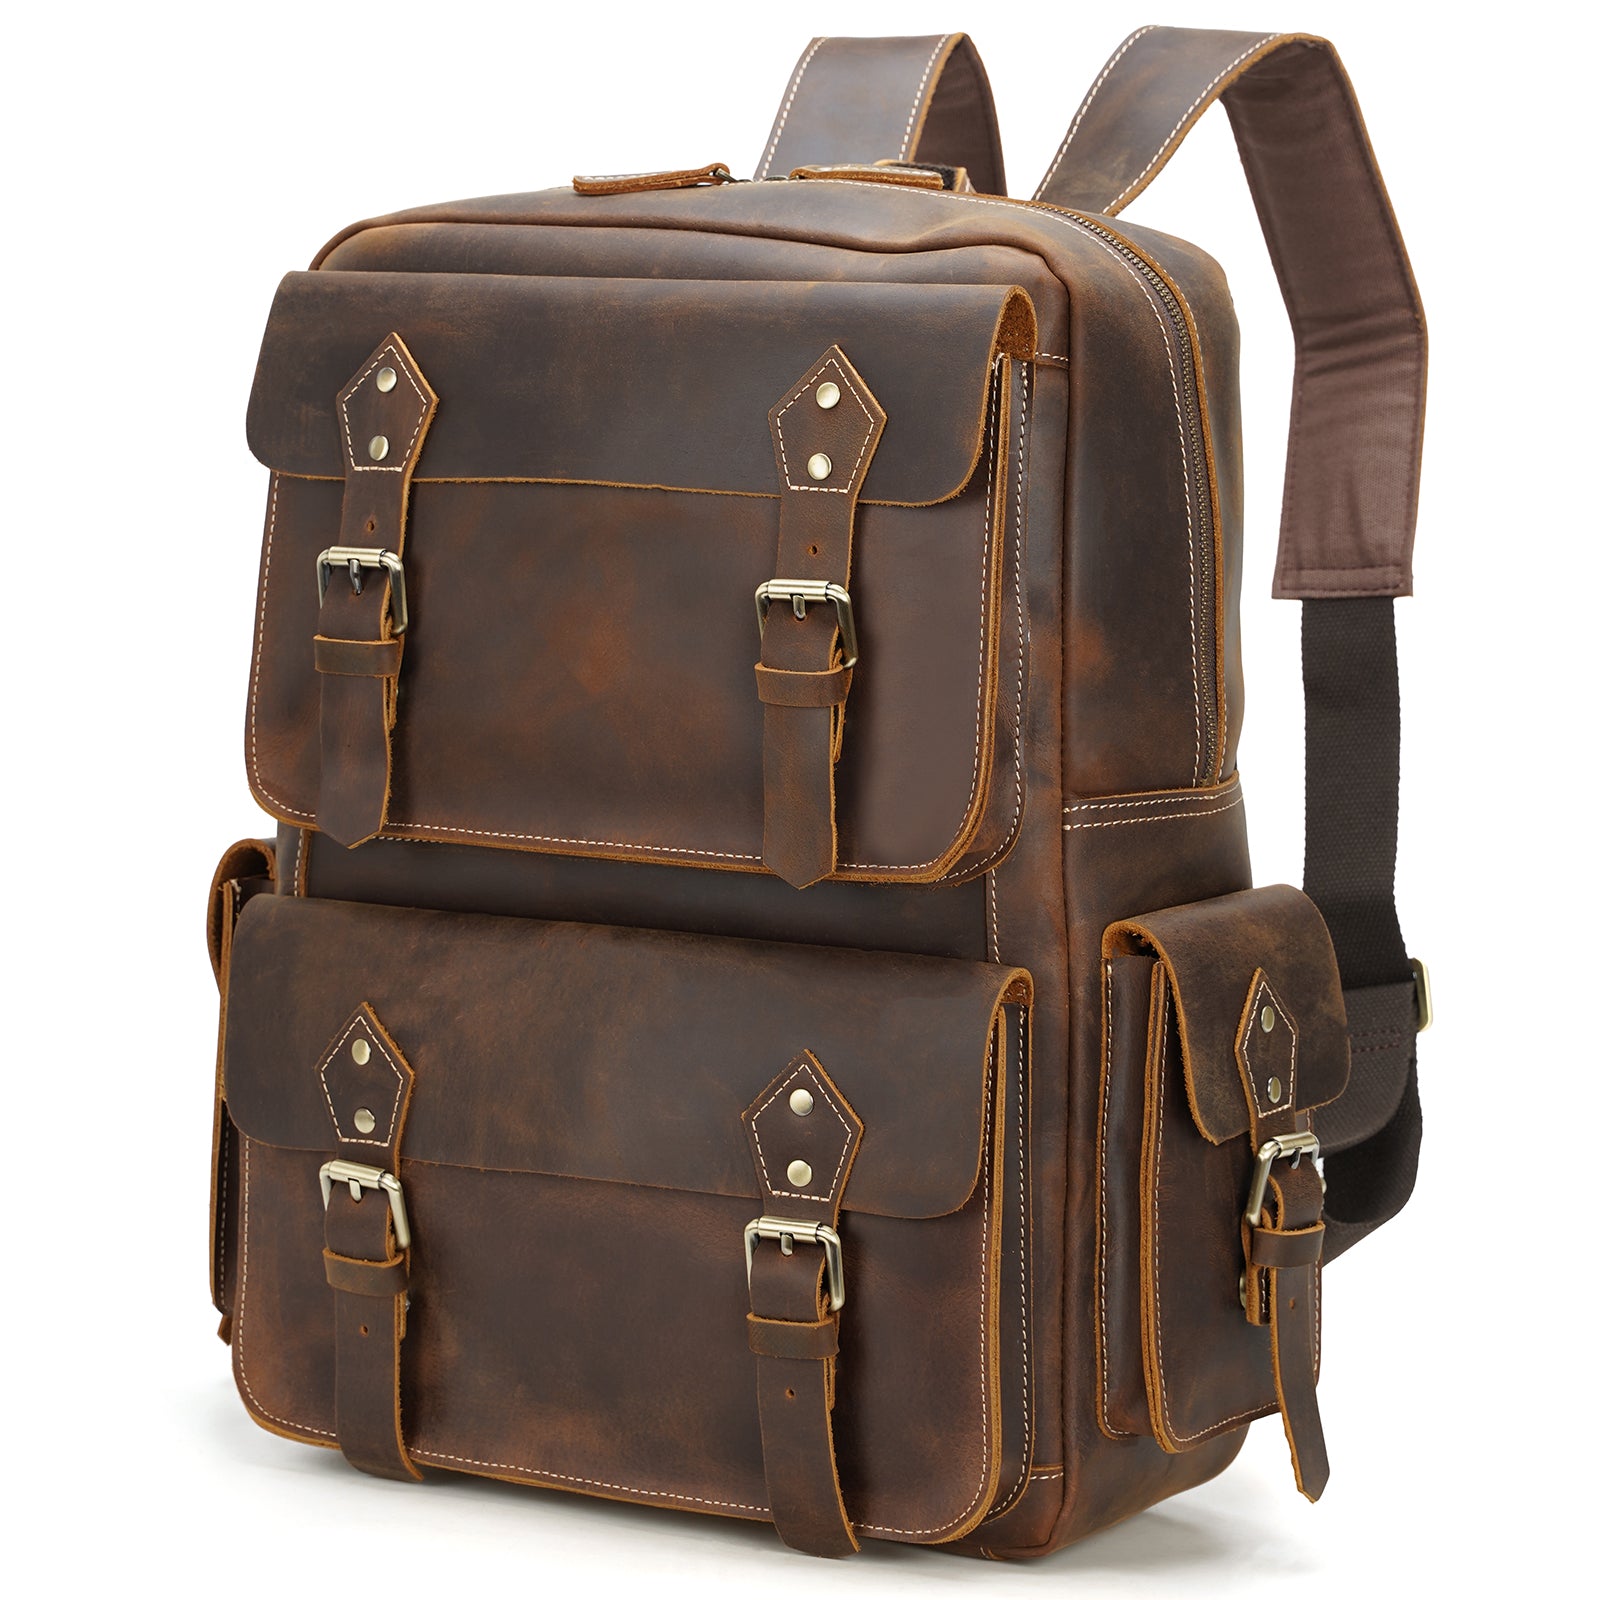 Polare Full Grain Leather Backpack Computer Bag Travel Daypack Satchel ...